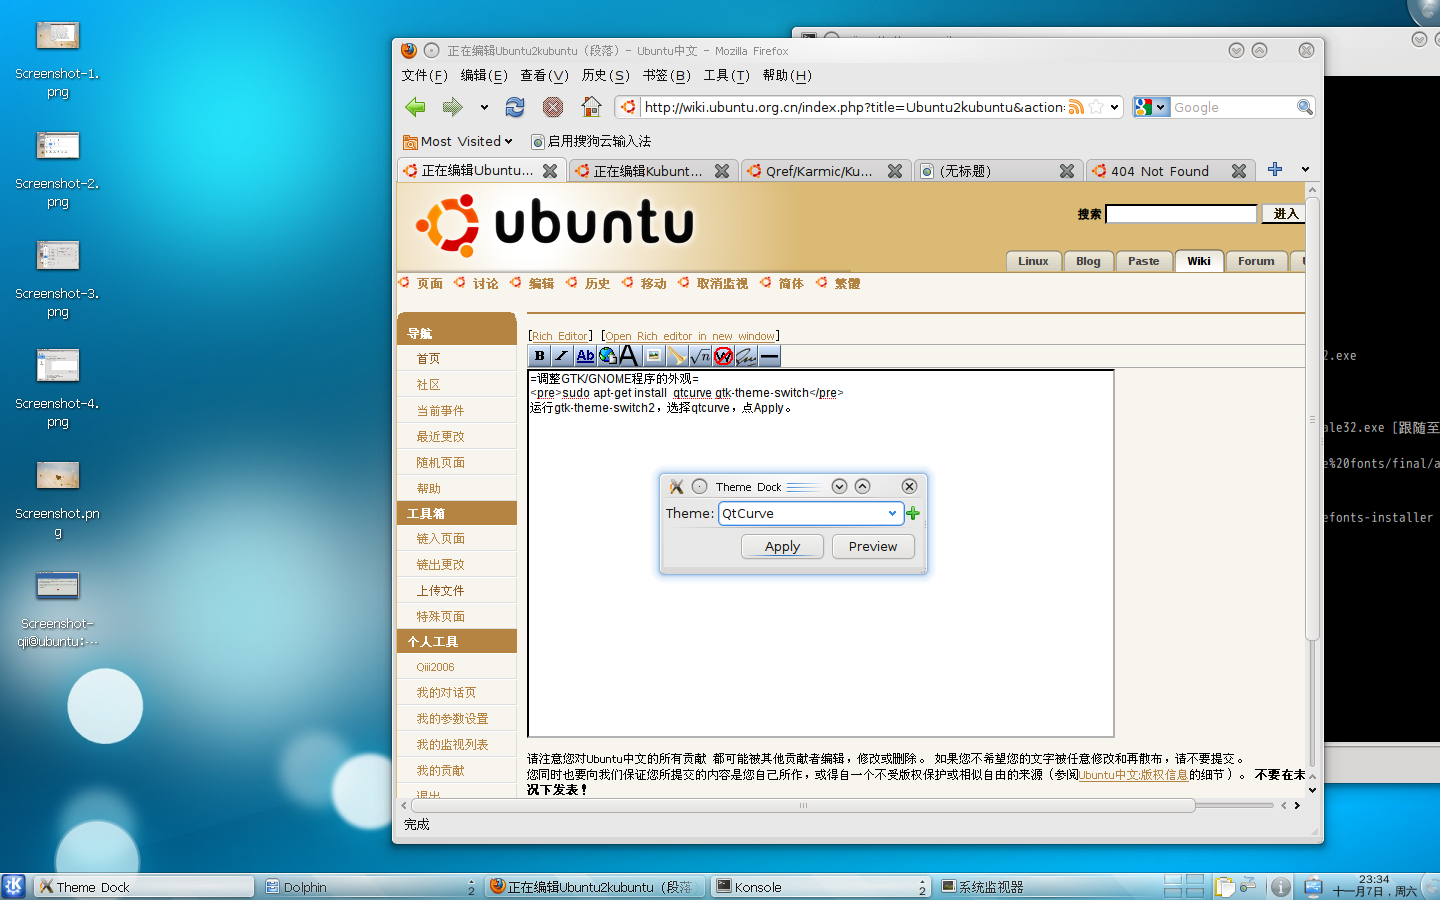 Ubuntu2kubuntuqtcurve2.png